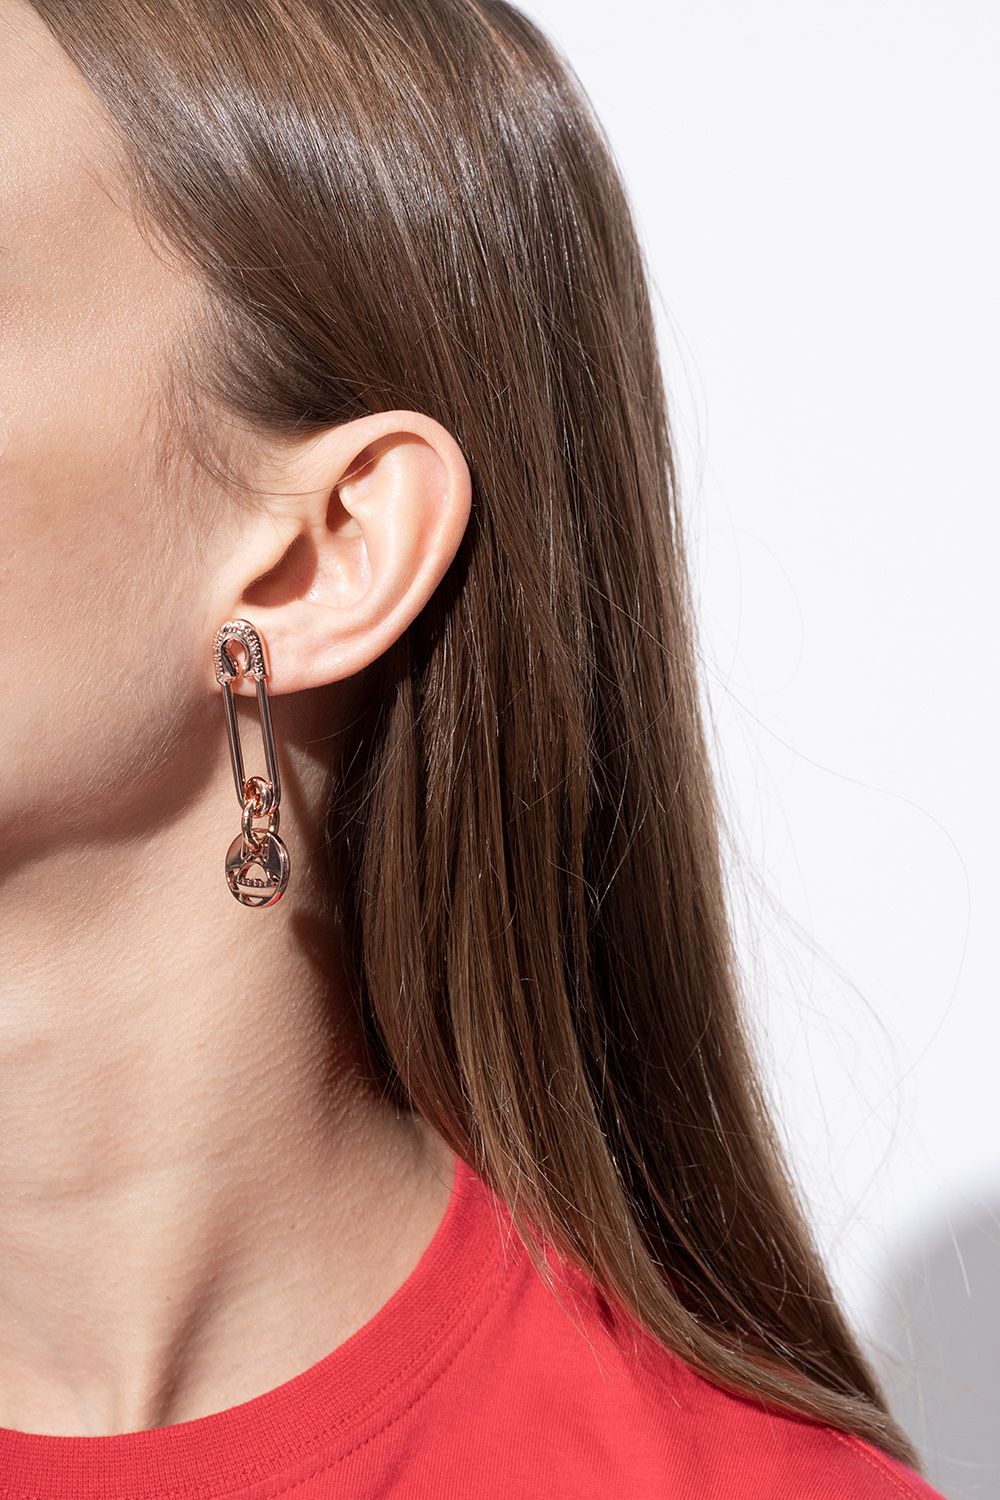 Vivienne Westwood ‘Imogene’ earrings with charm